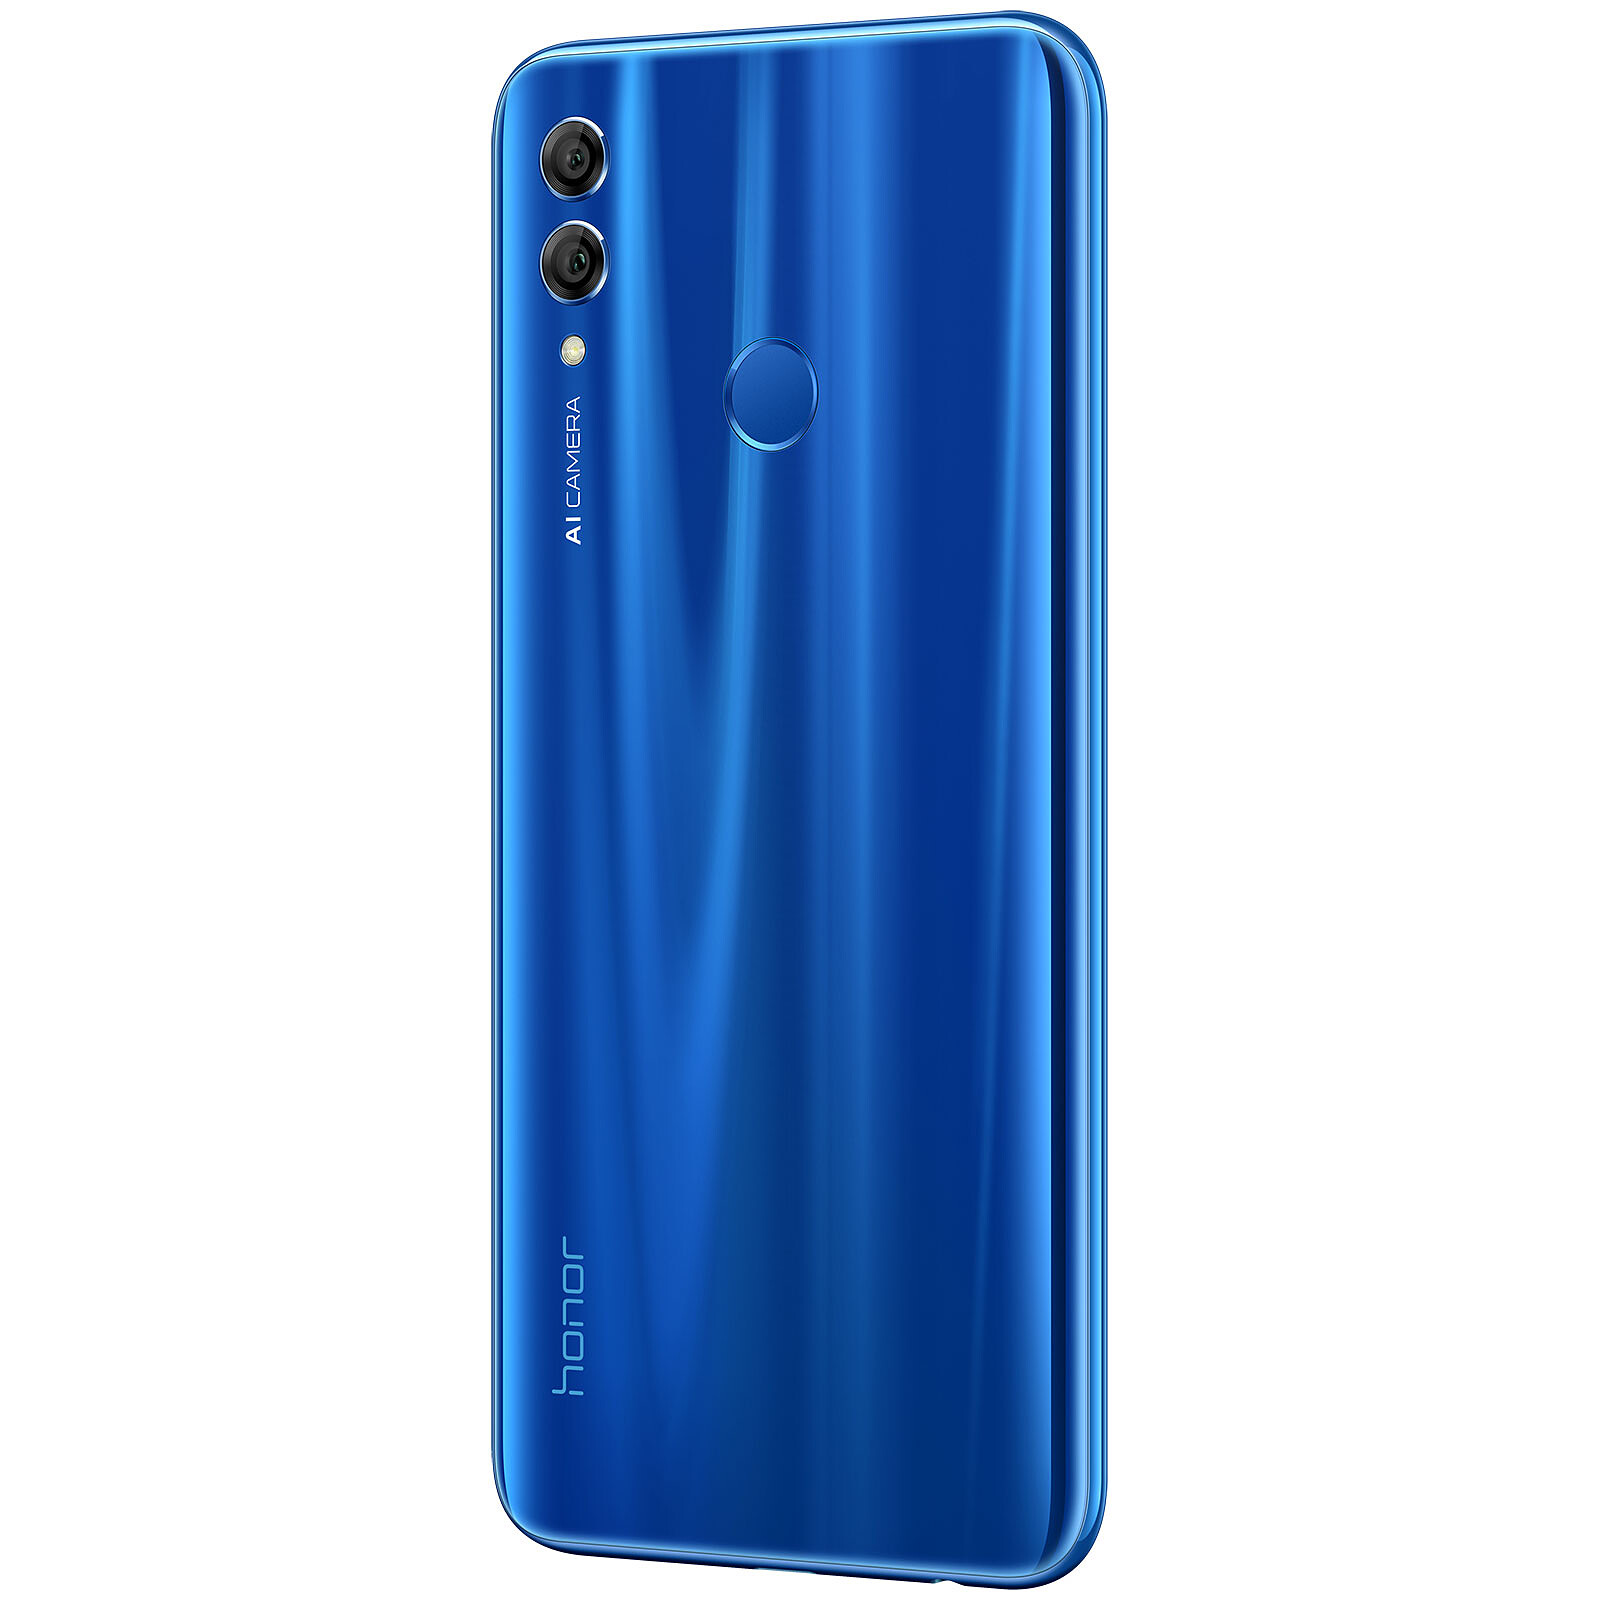 Хонор купить в нижнем новгороде. Huawei Honor 10 Lite 64gb. Honor 10 Lite синий. Смартфон Honor 10 Lite hry-lx1. Huawei Honor 10i.